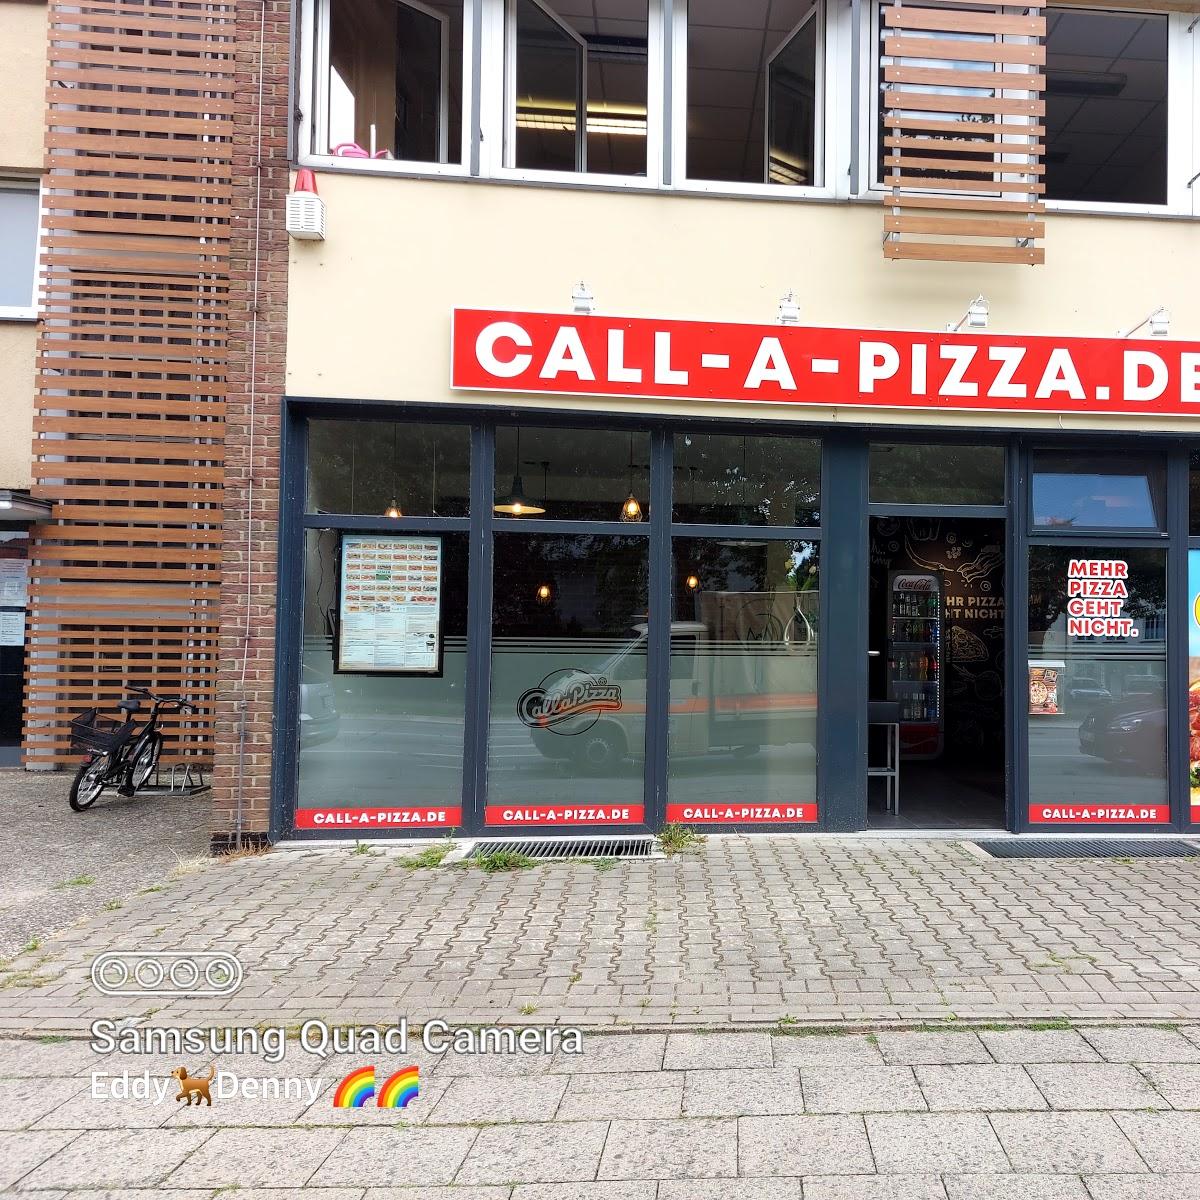 Restaurant "Call a Pizza" in Lübeck